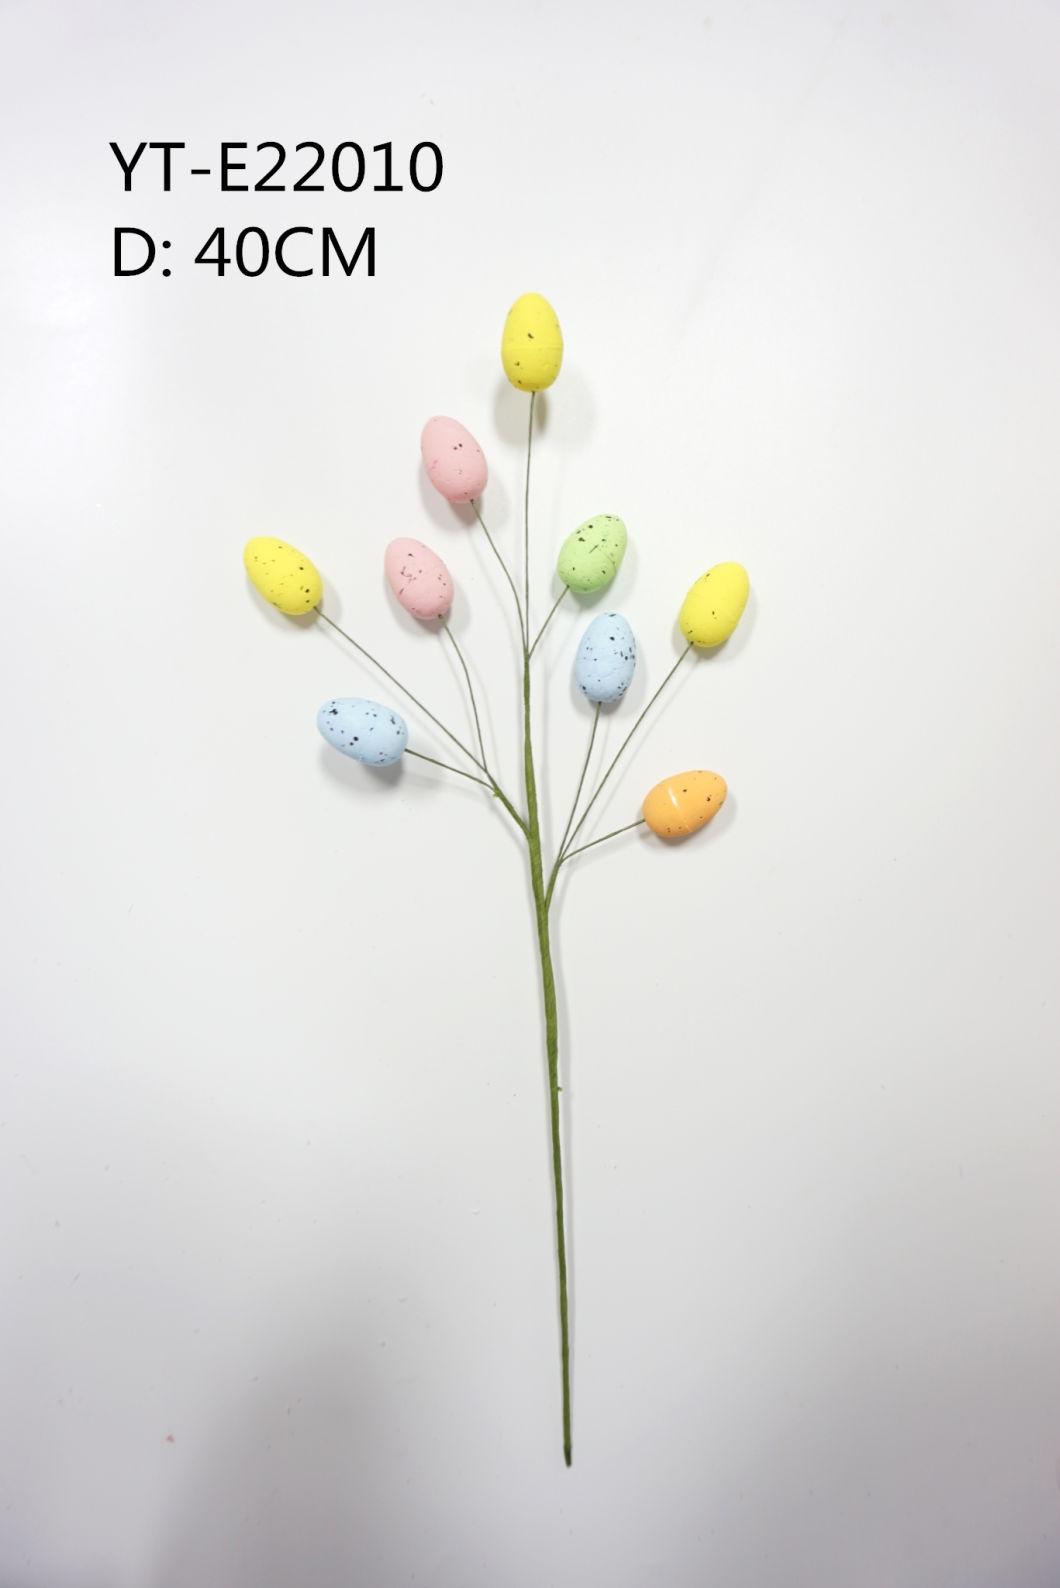 Yt-E22021 Easter Eggs Decor Picks with DIY Materials